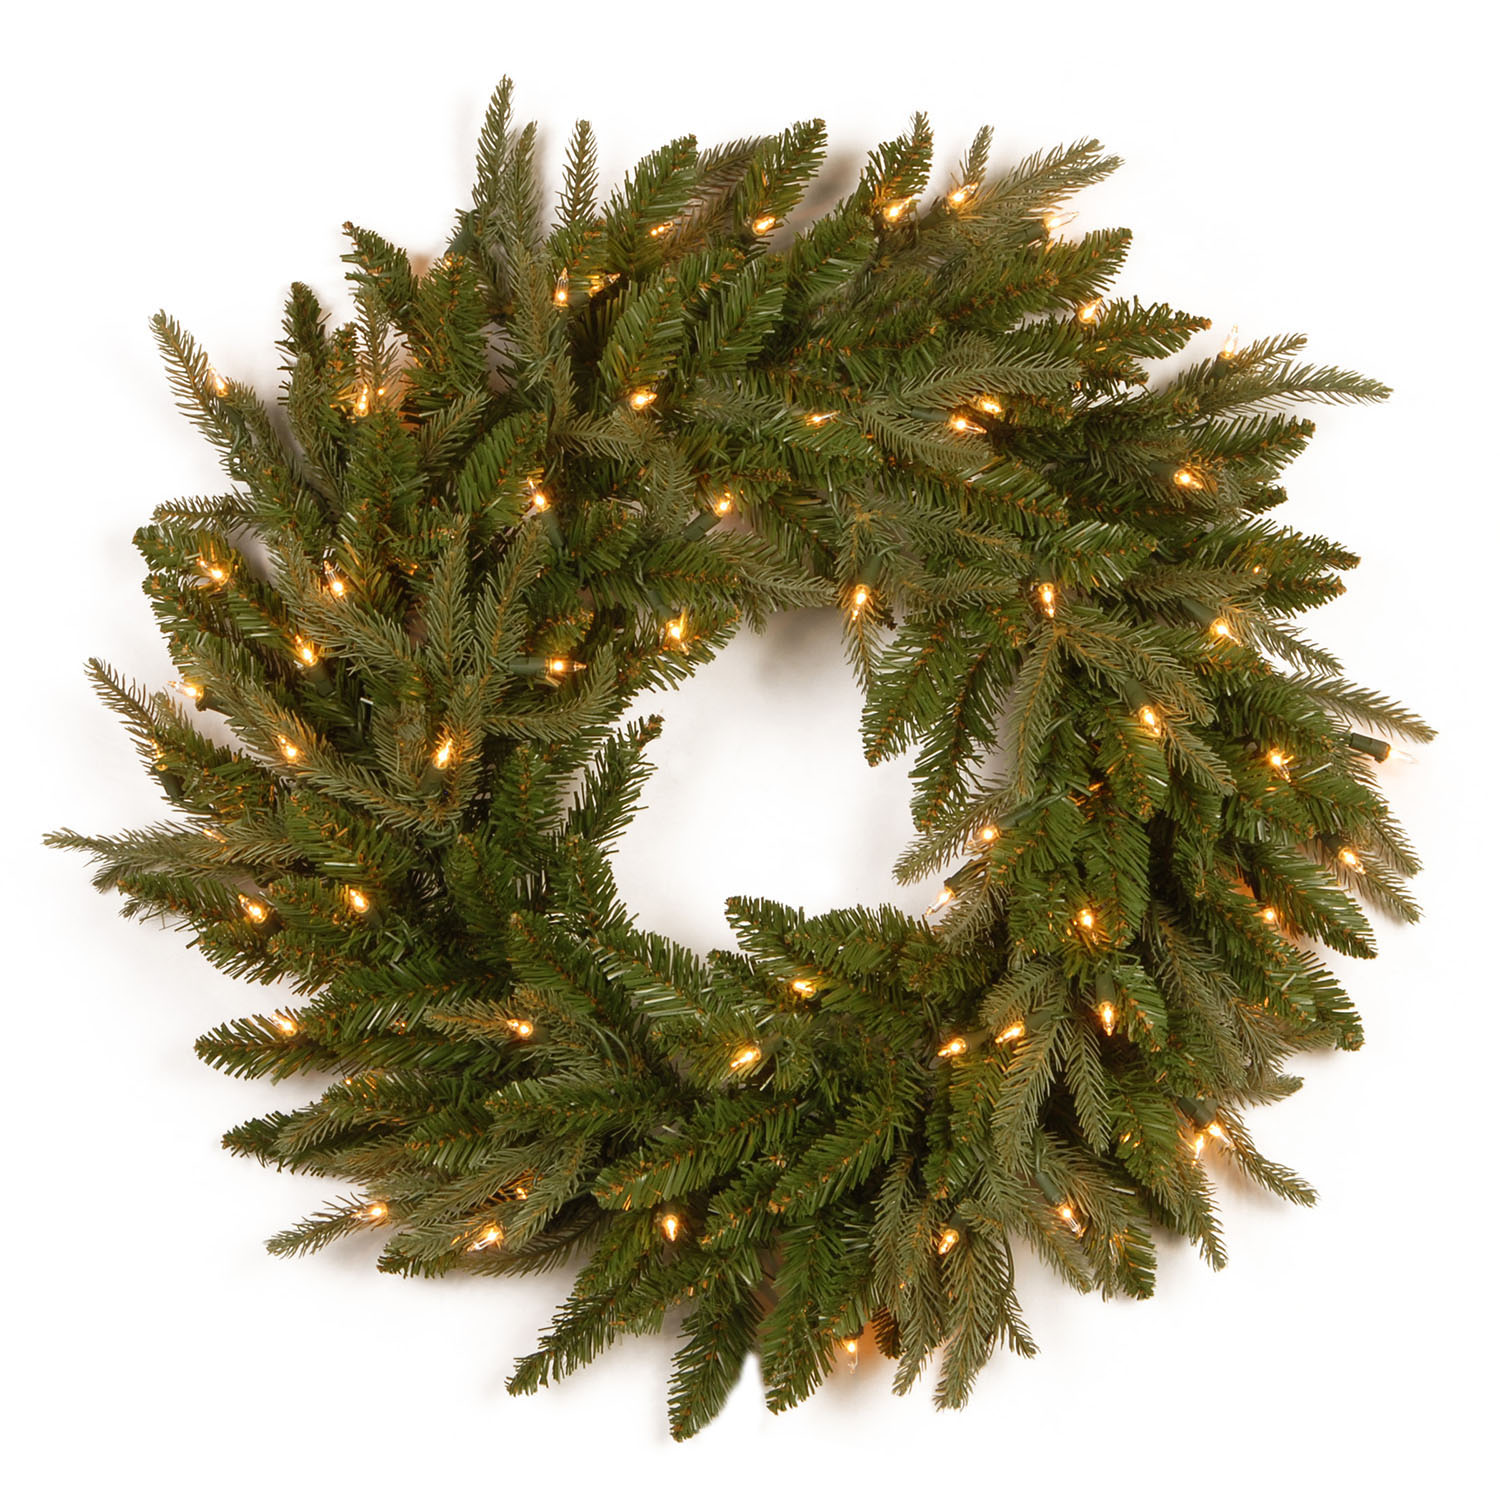 24 Inch Fraser Wreath: 70 Clear Lights